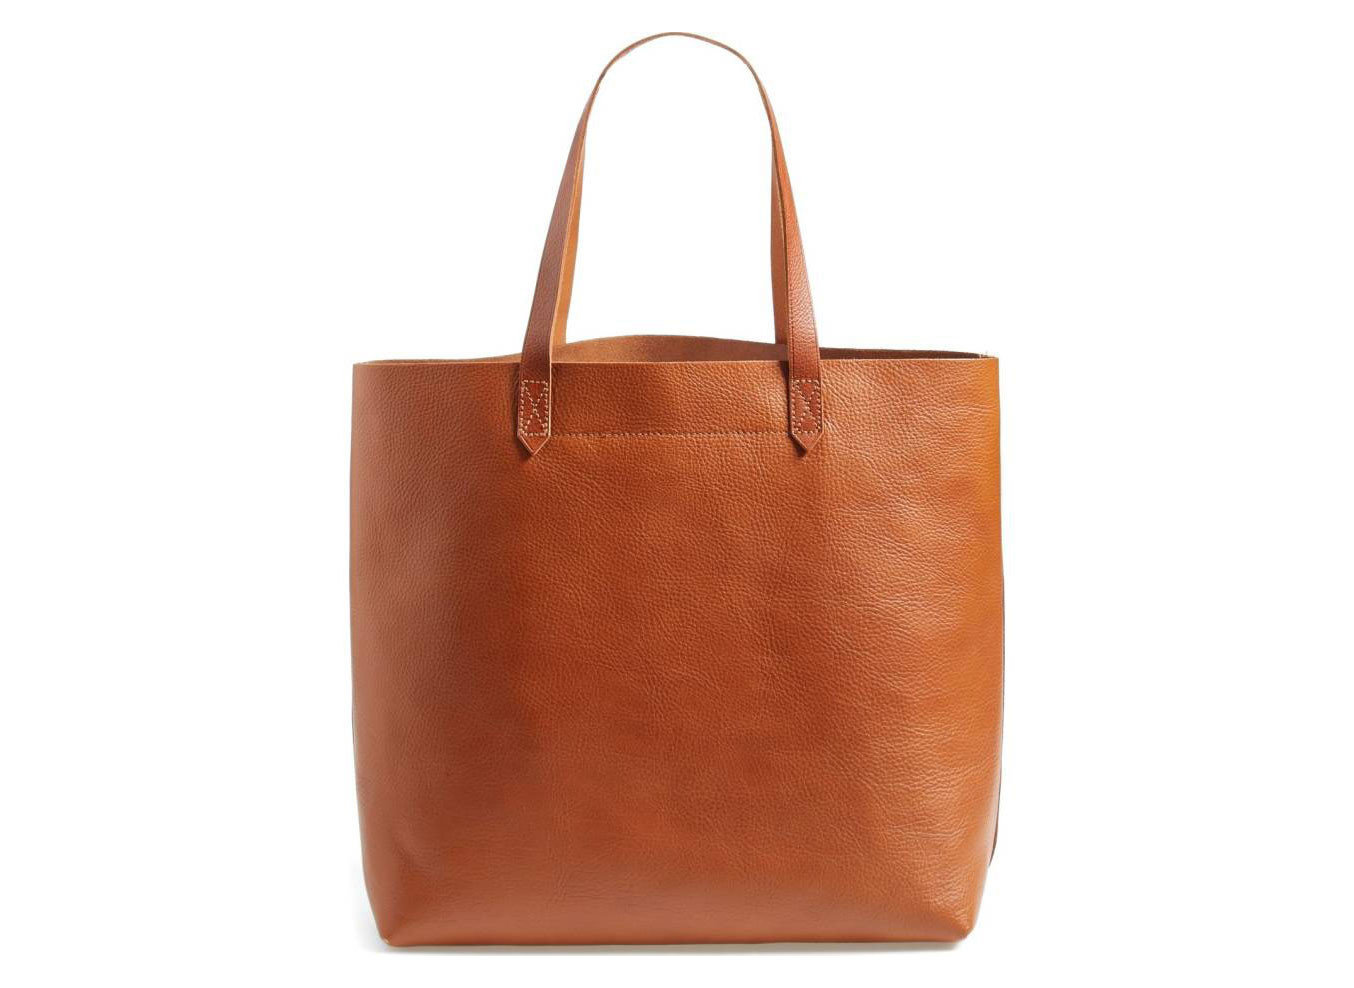 Style + Design Travel Shop accessory case handbag brown bag leather orange shoulder bag caramel color fashion accessory product peach tote bag product design beige brand